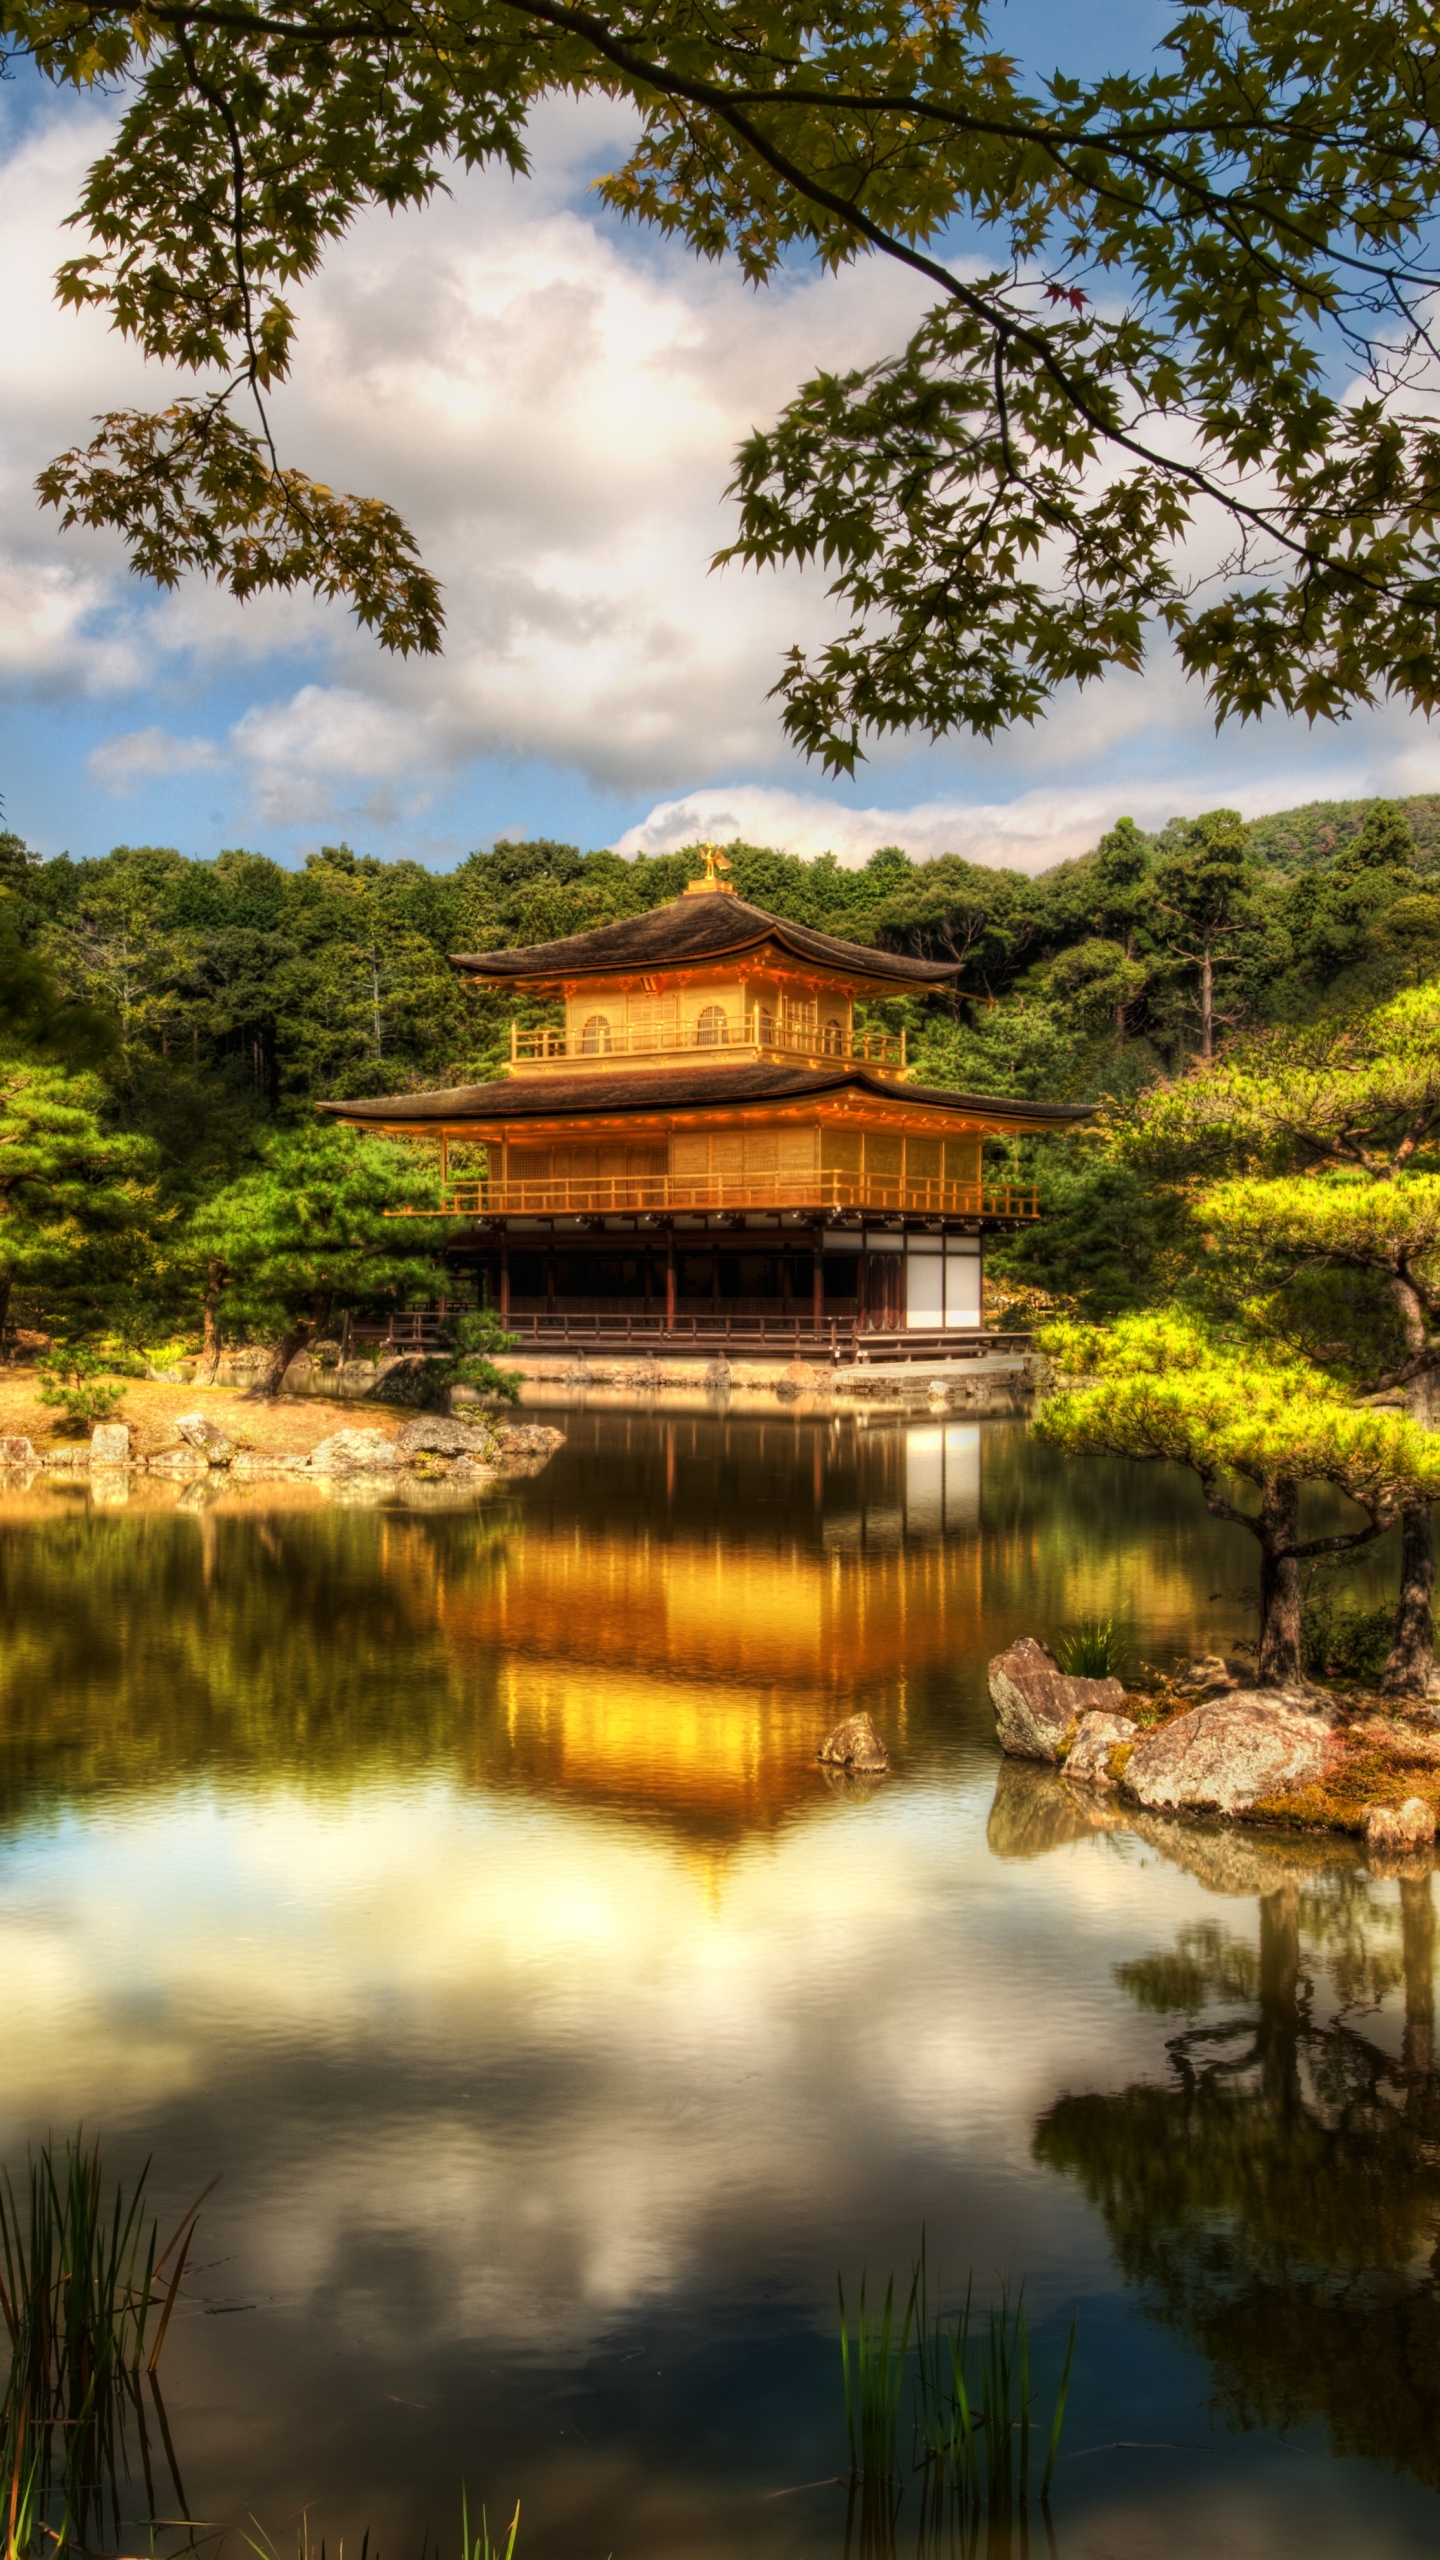 1090181 descargar imagen religioso, kinkaku ji, kioto, japón, templos: fondos de pantalla y protectores de pantalla gratis